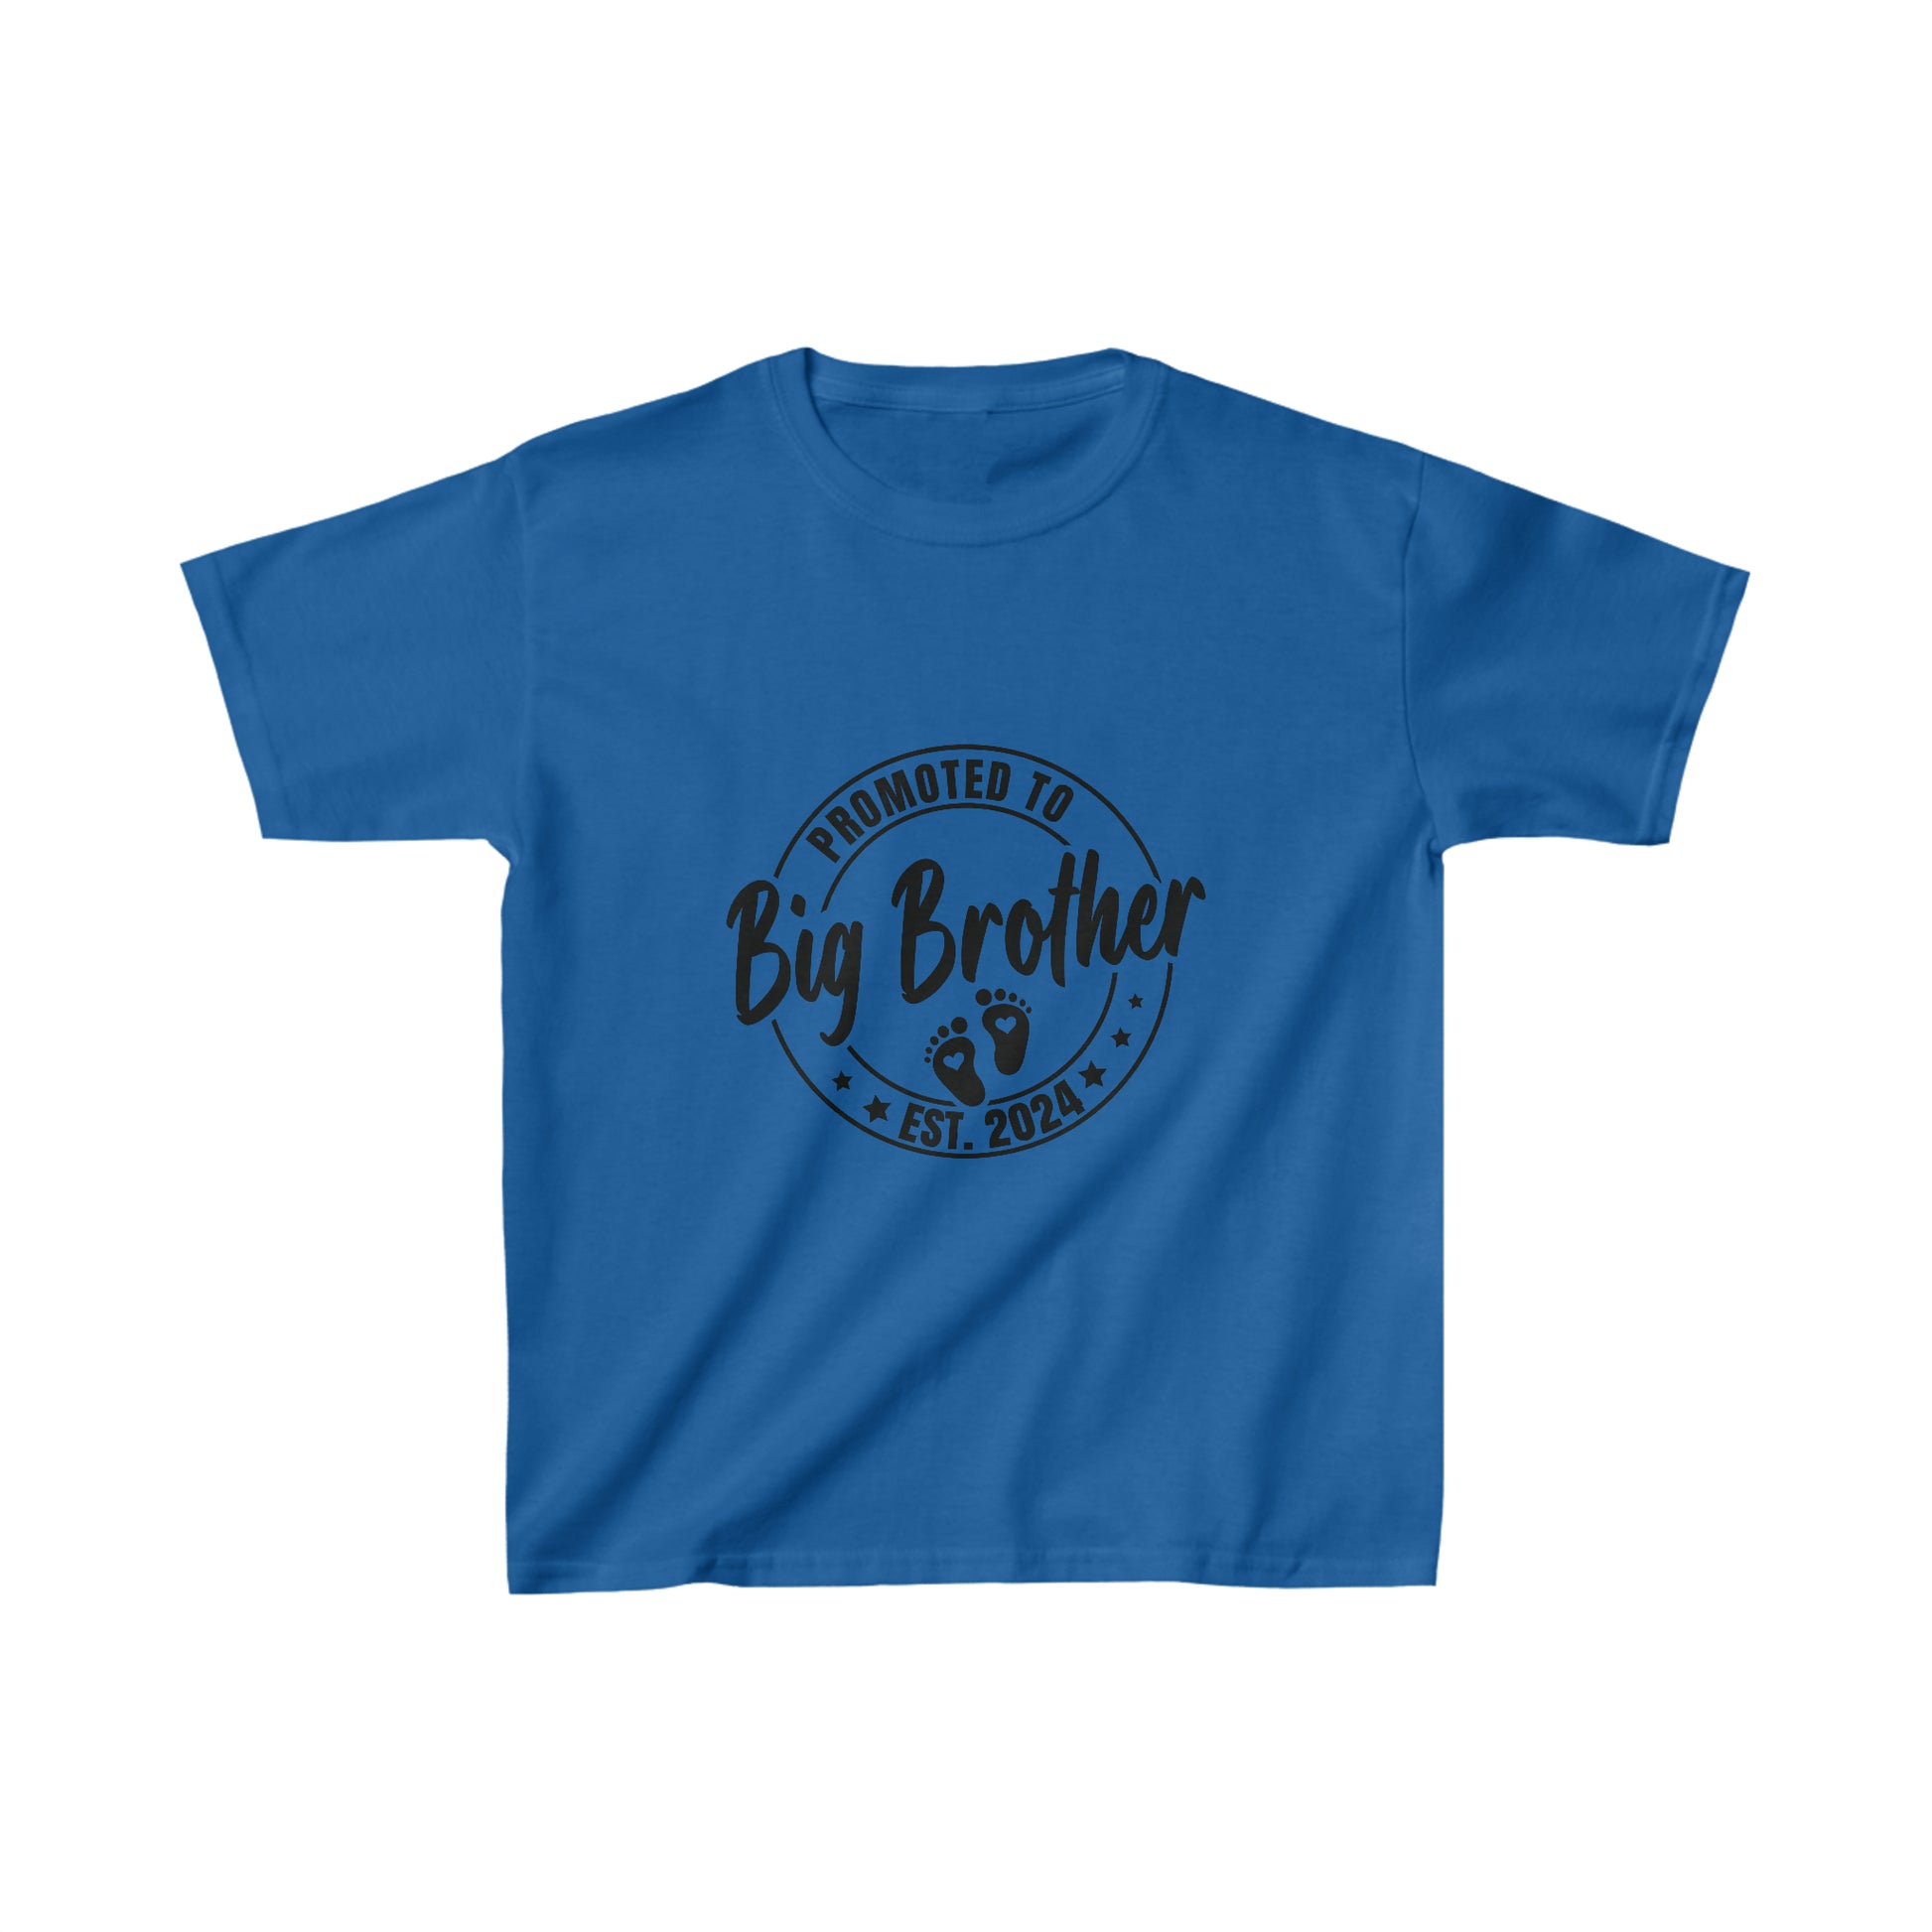 big brother tee shirt